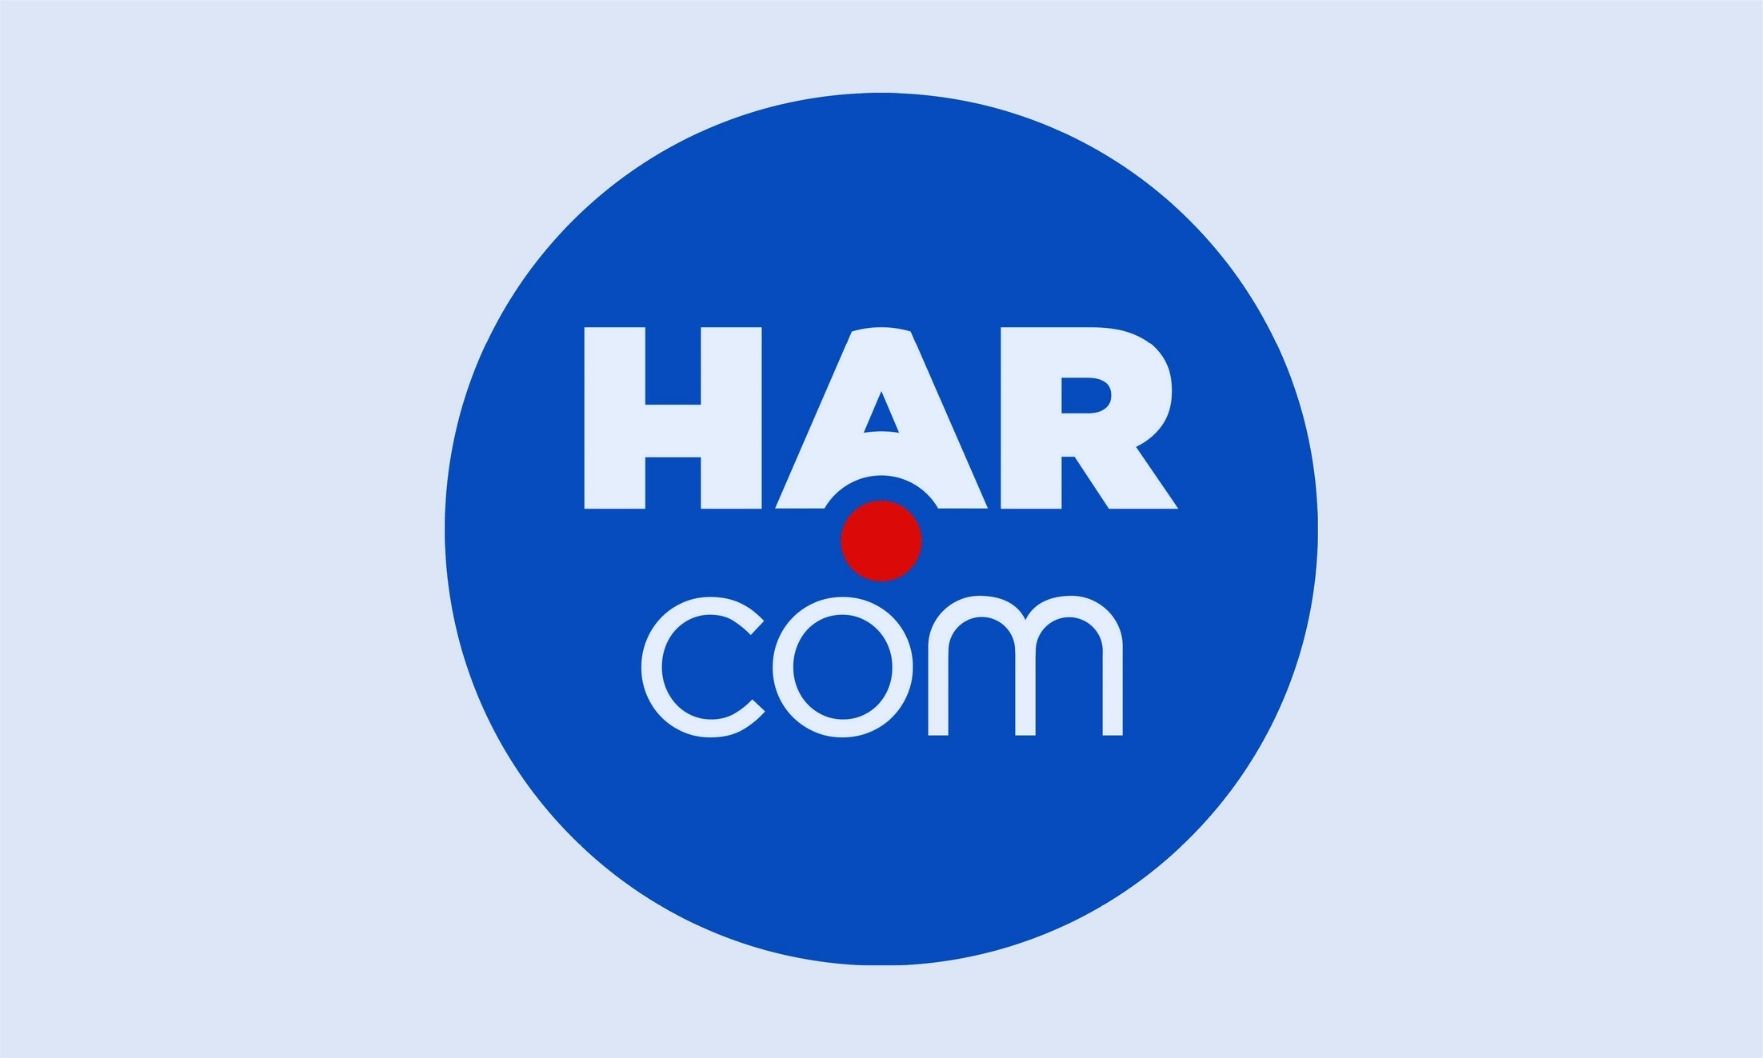 har.com houston